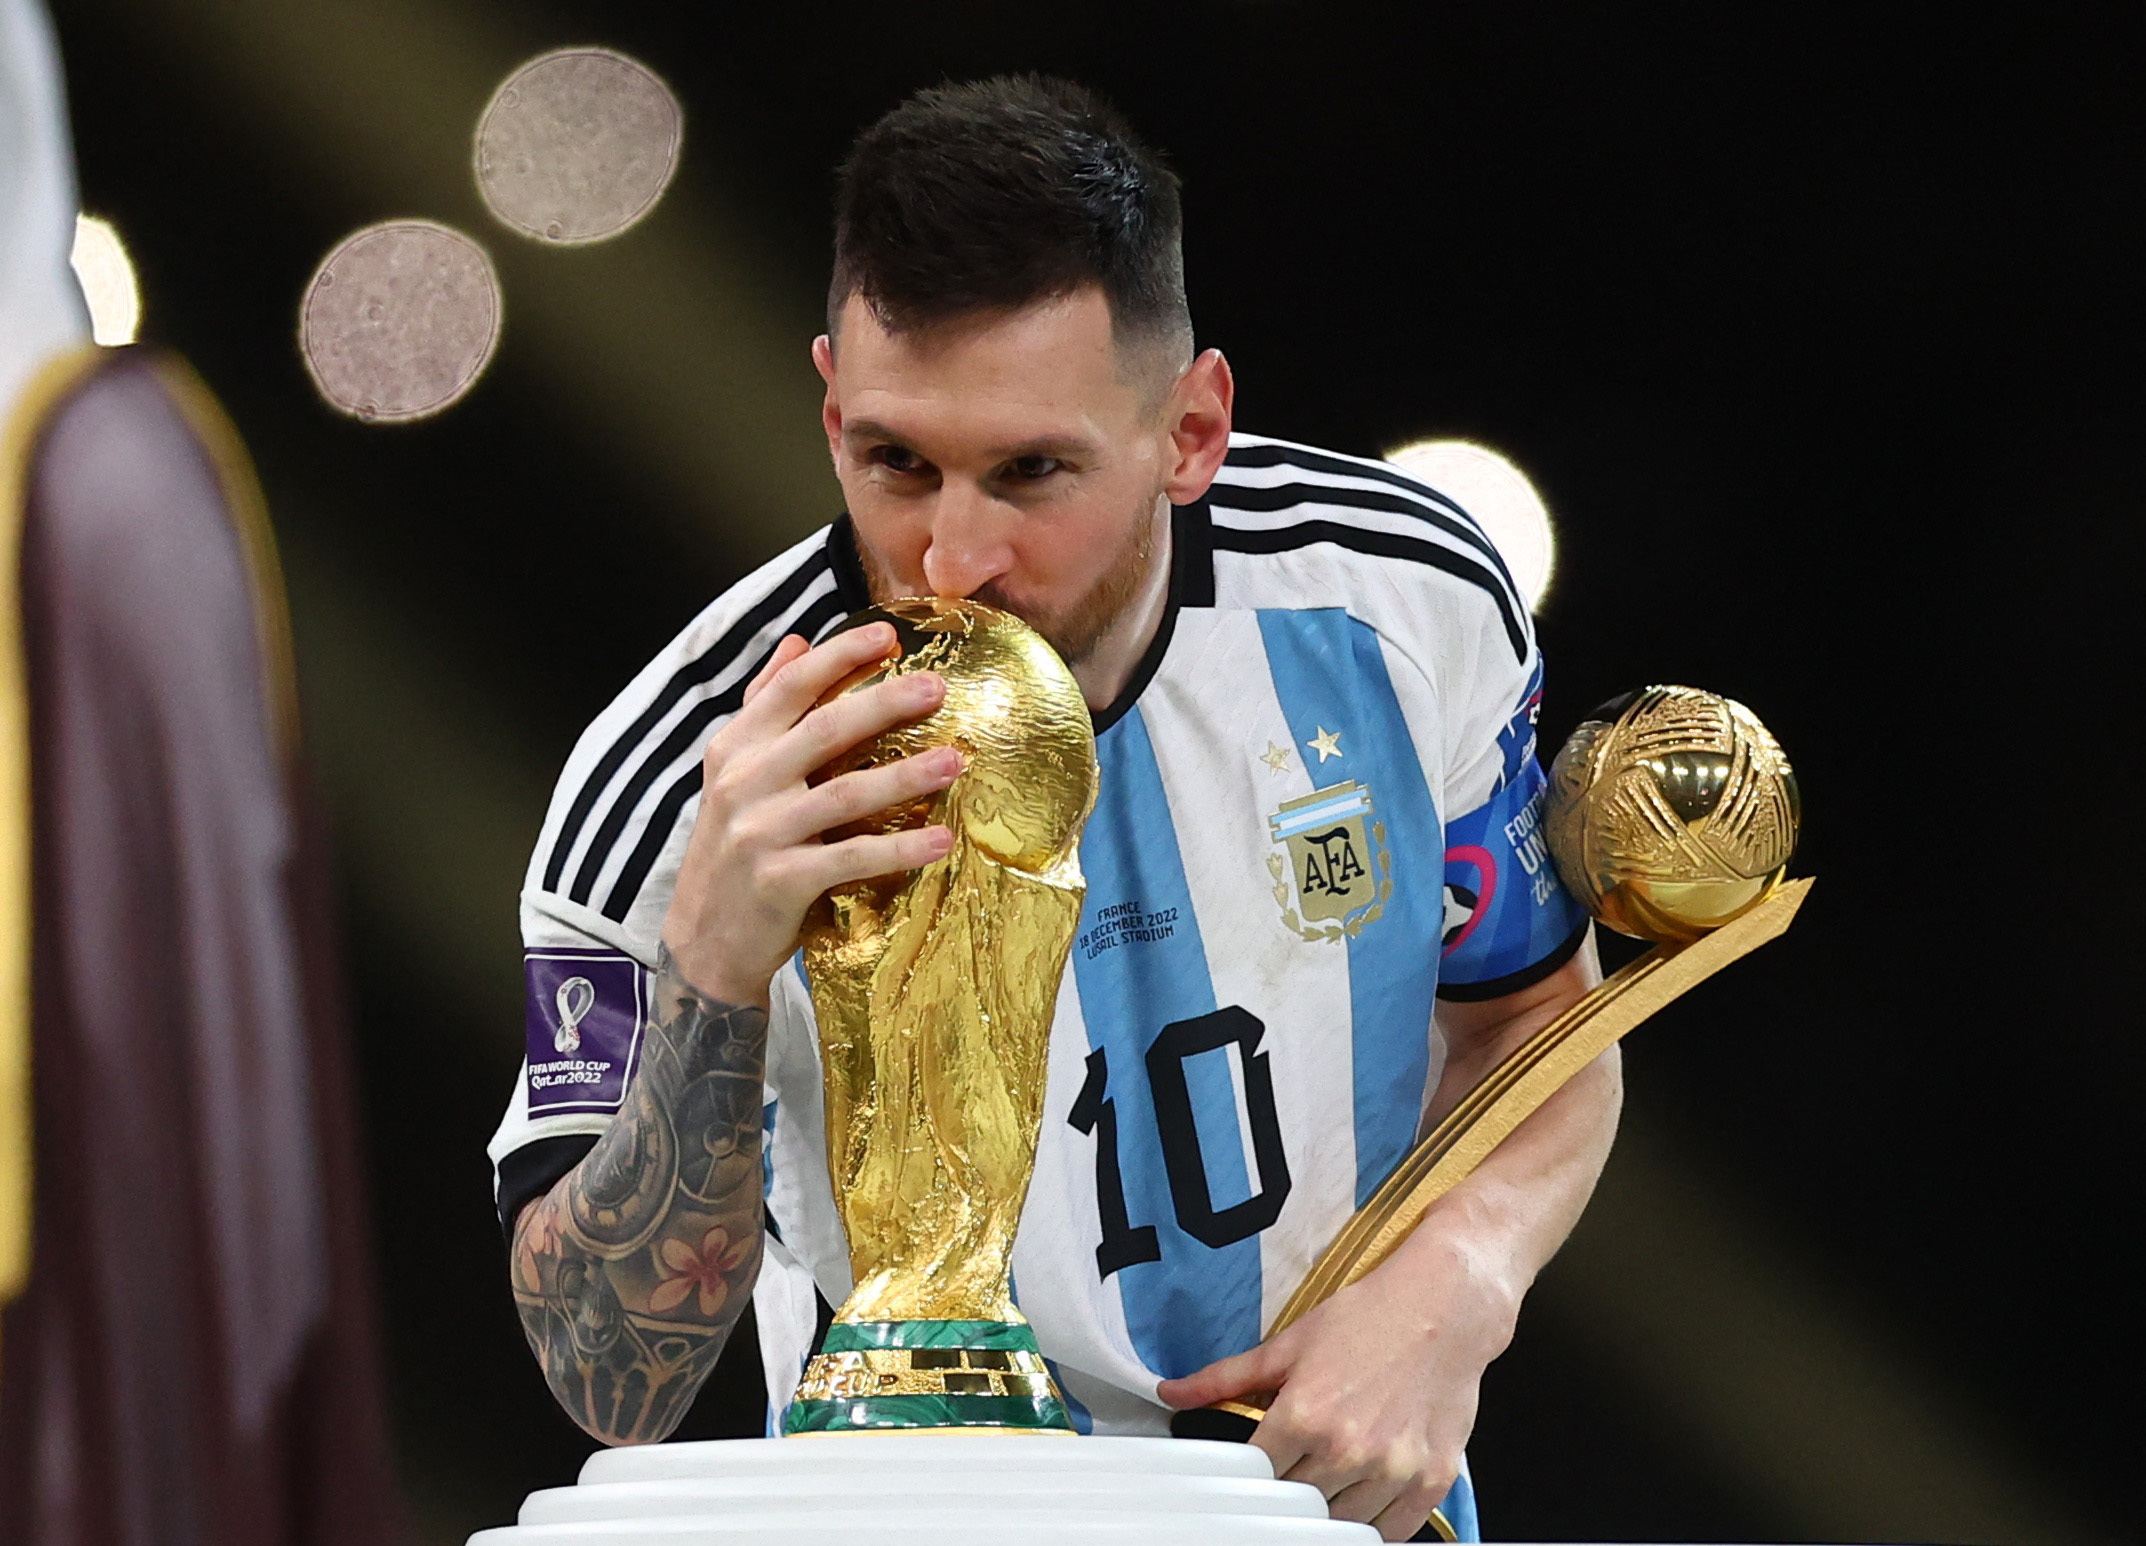 El beso de Messi a la copa (REUTERS/Carl Recine)